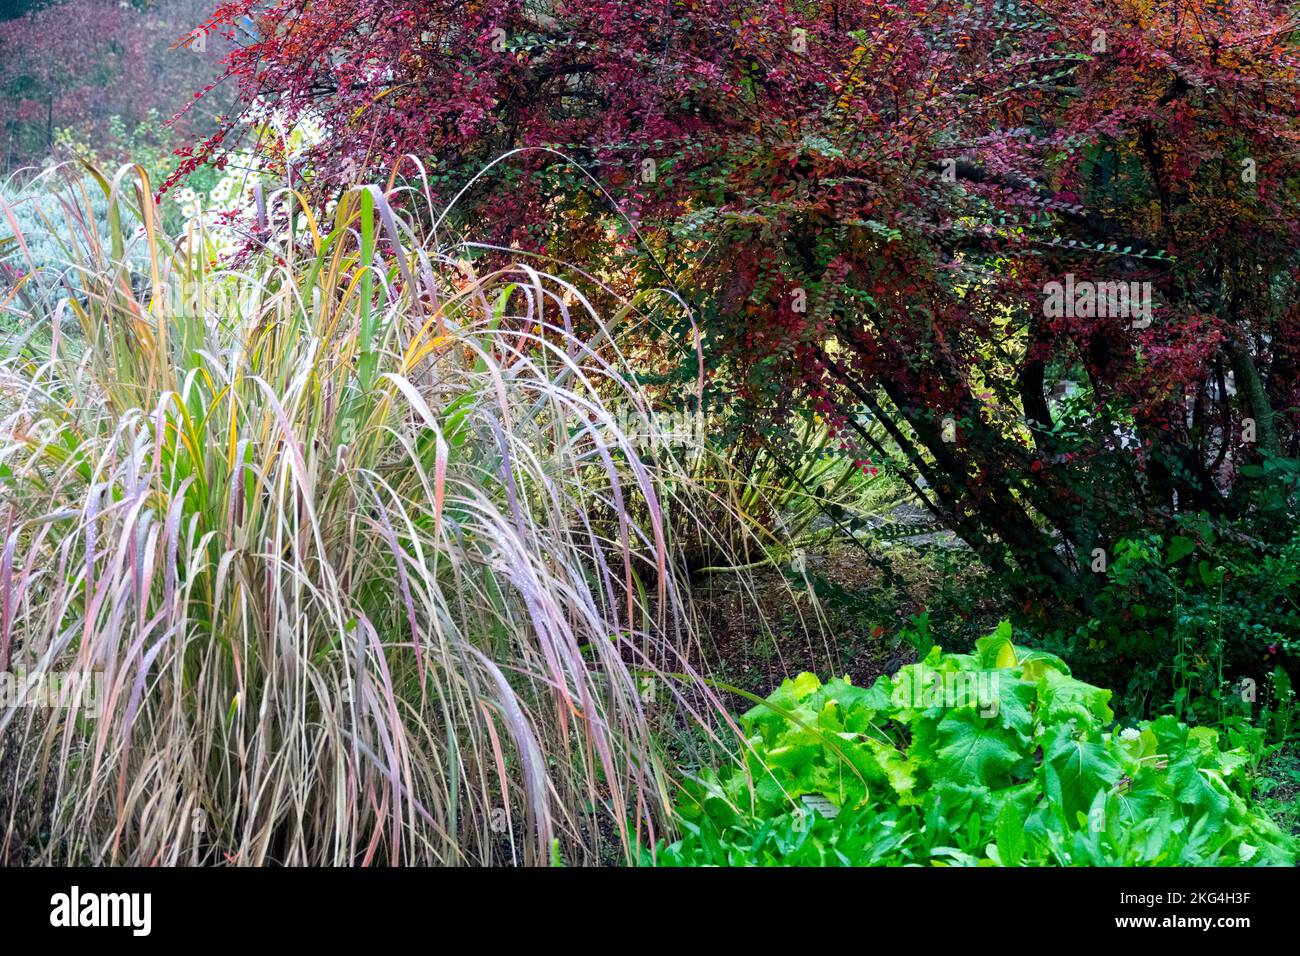 Ravenna Grass, Saccharum ravennae, Spreading Cotoneaster divaricatus, Autumn, Garden Stock Photo